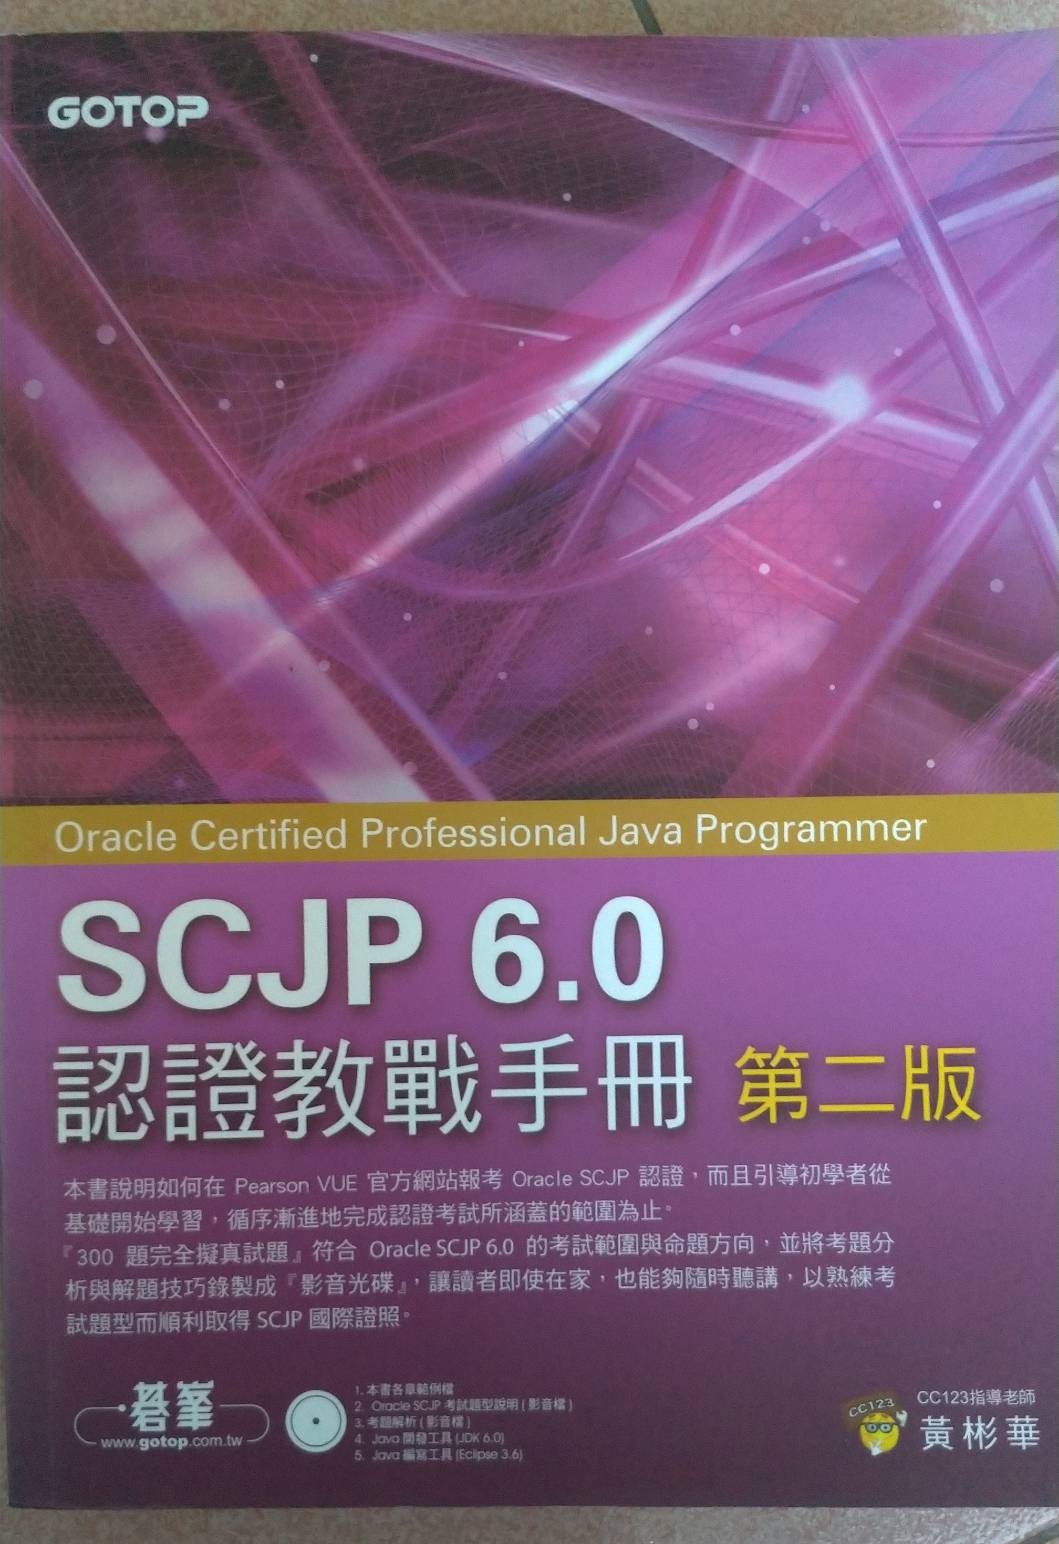 SCJP 6.0認證教戰手冊 (第二版) 詳細資料